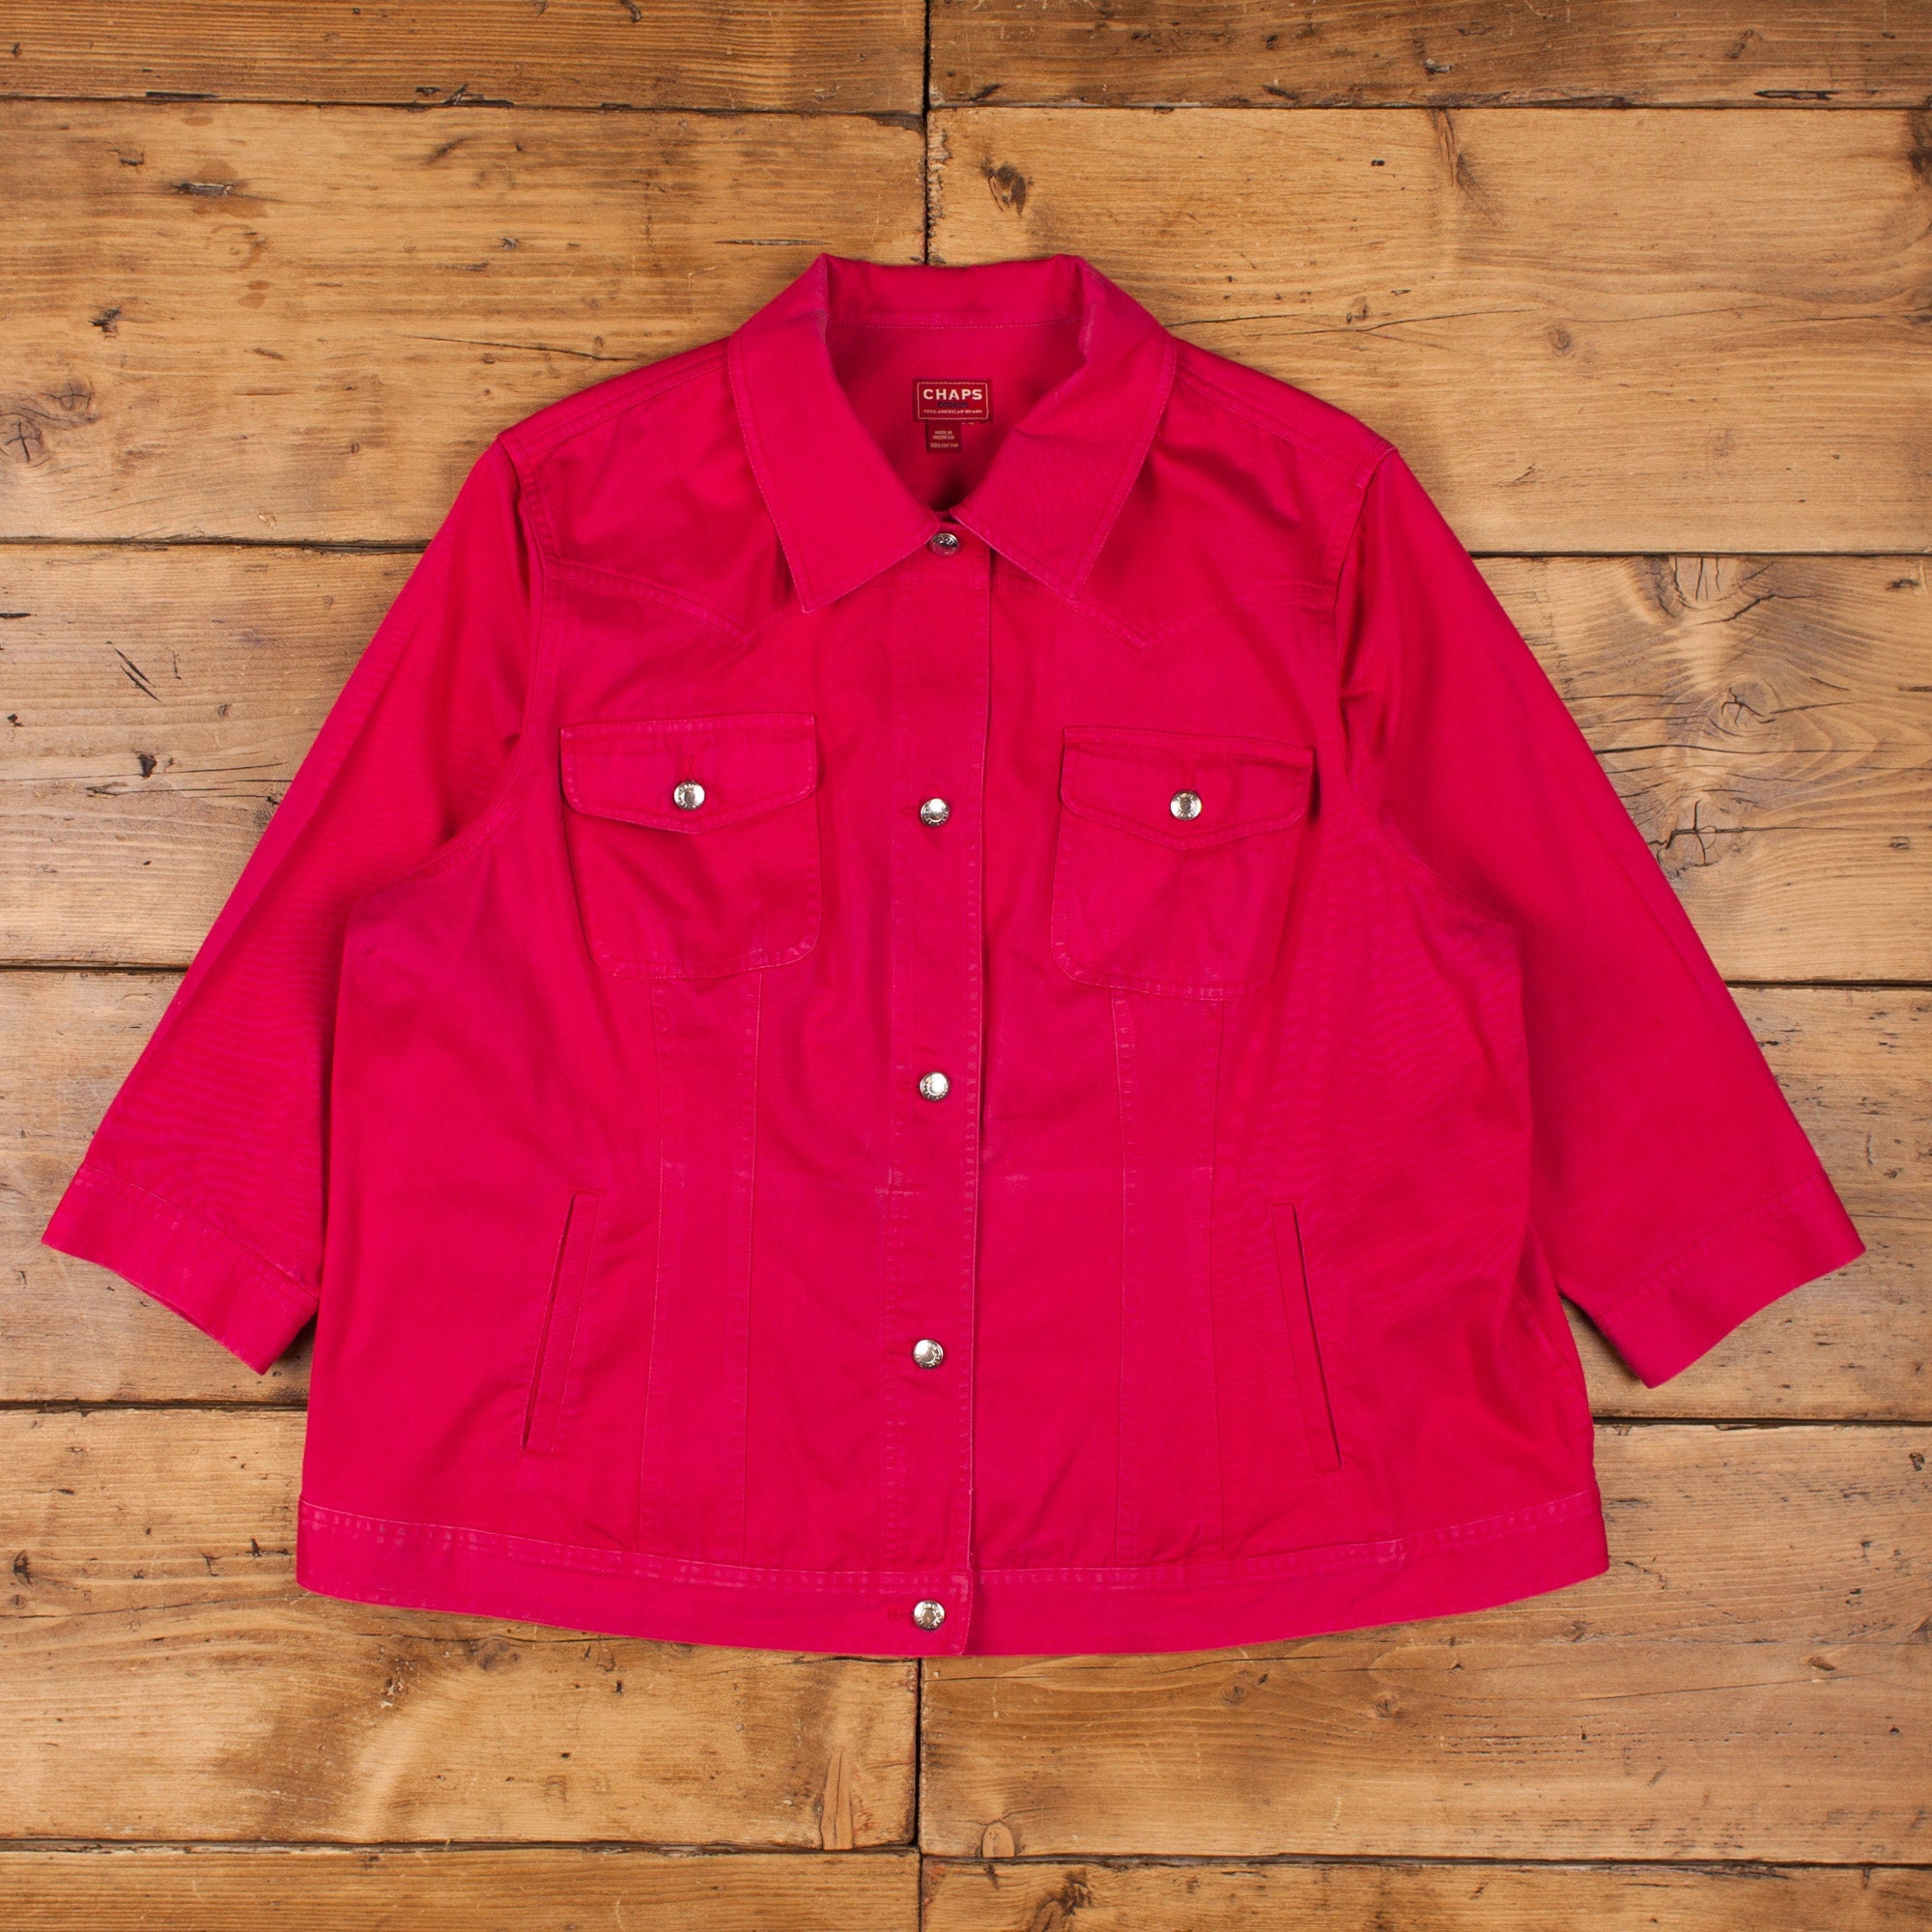 Chaps | Jackets & Coats | Chaps Denim Barn Jacket Small | Poshmark